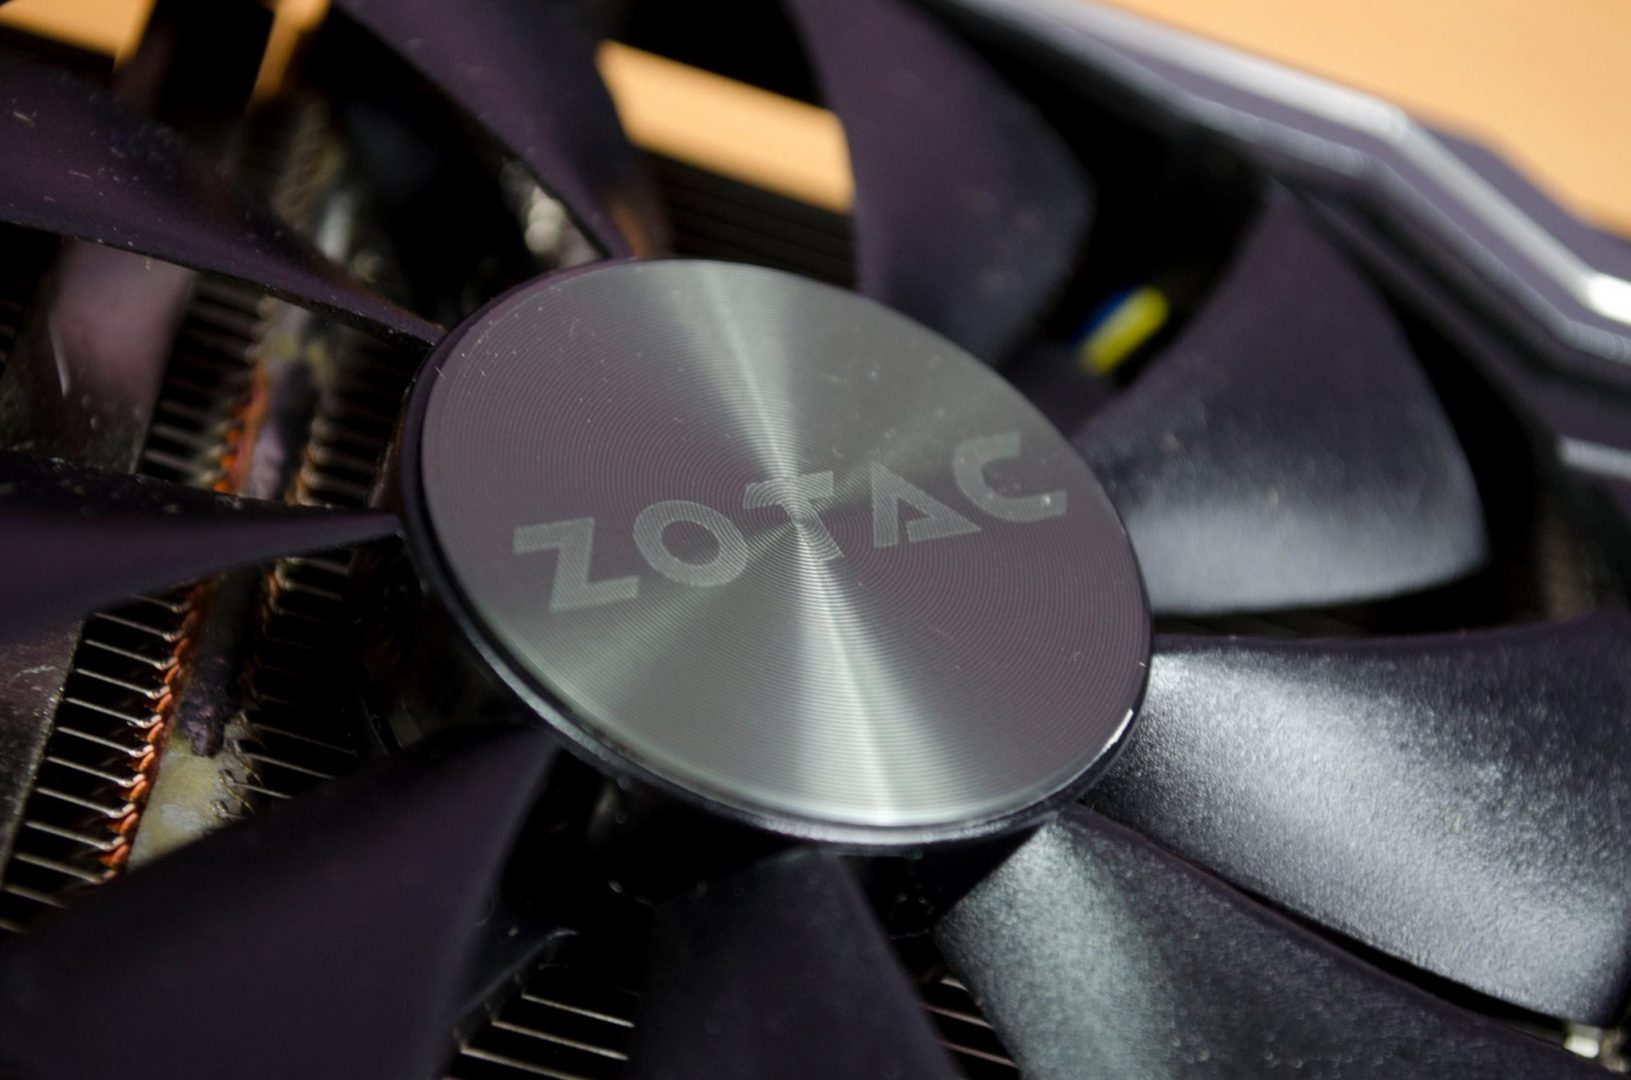 ZOTAC GeForce® GTX 1060 6GB AMP! Edition Review